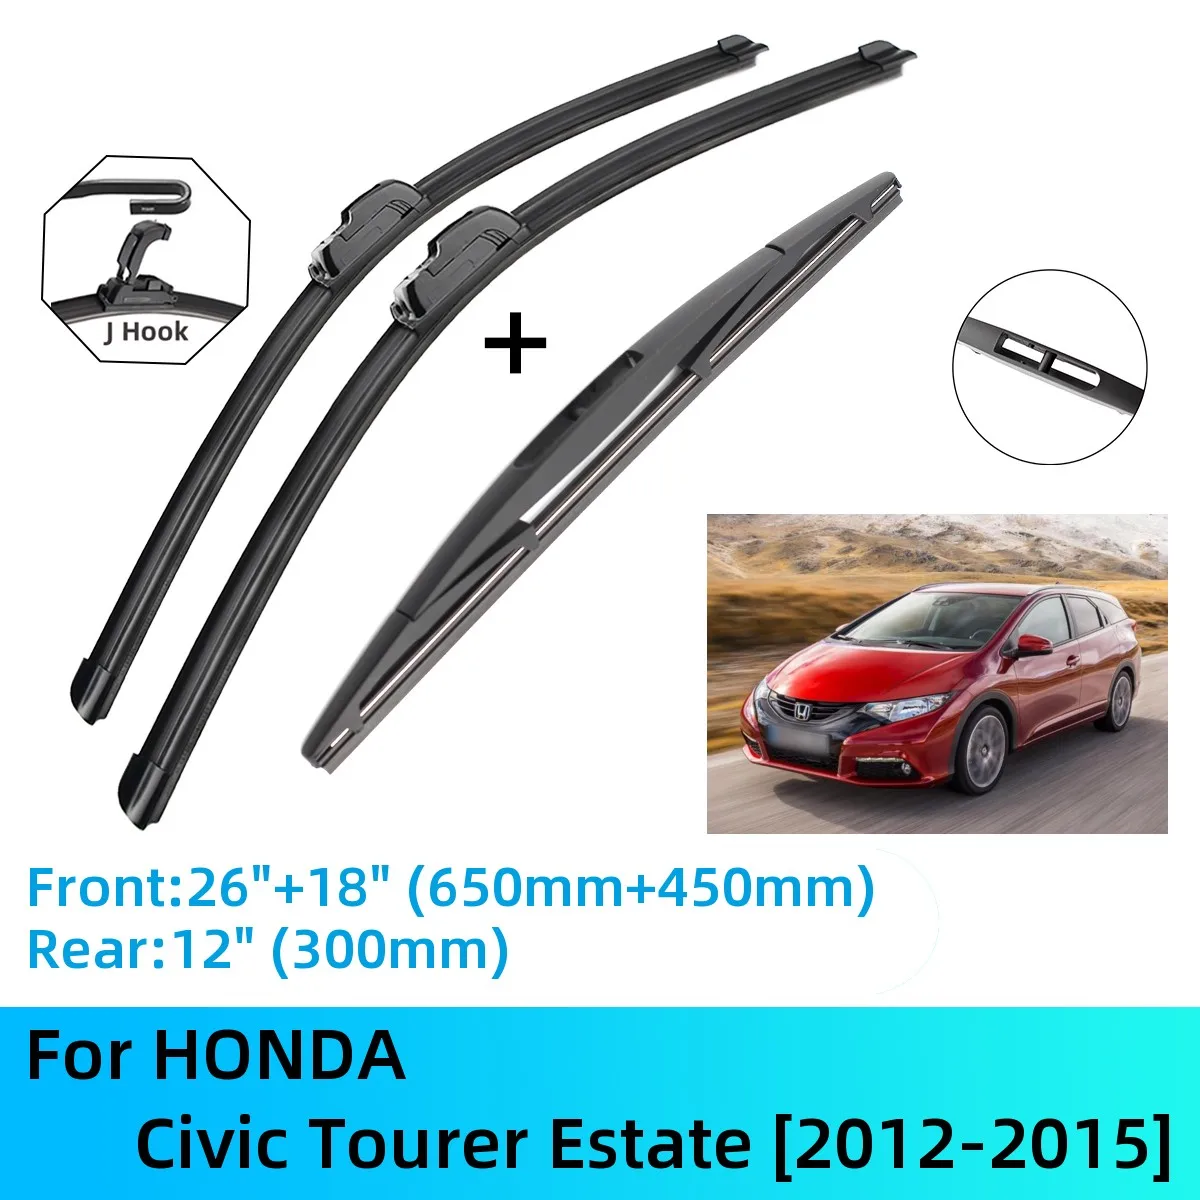 For HONDA Civic Tourer Estate Front Rear Wiper Blades Brushes Cutter Accessories J U Hook 2012-2015 2012 2013 2014 2015